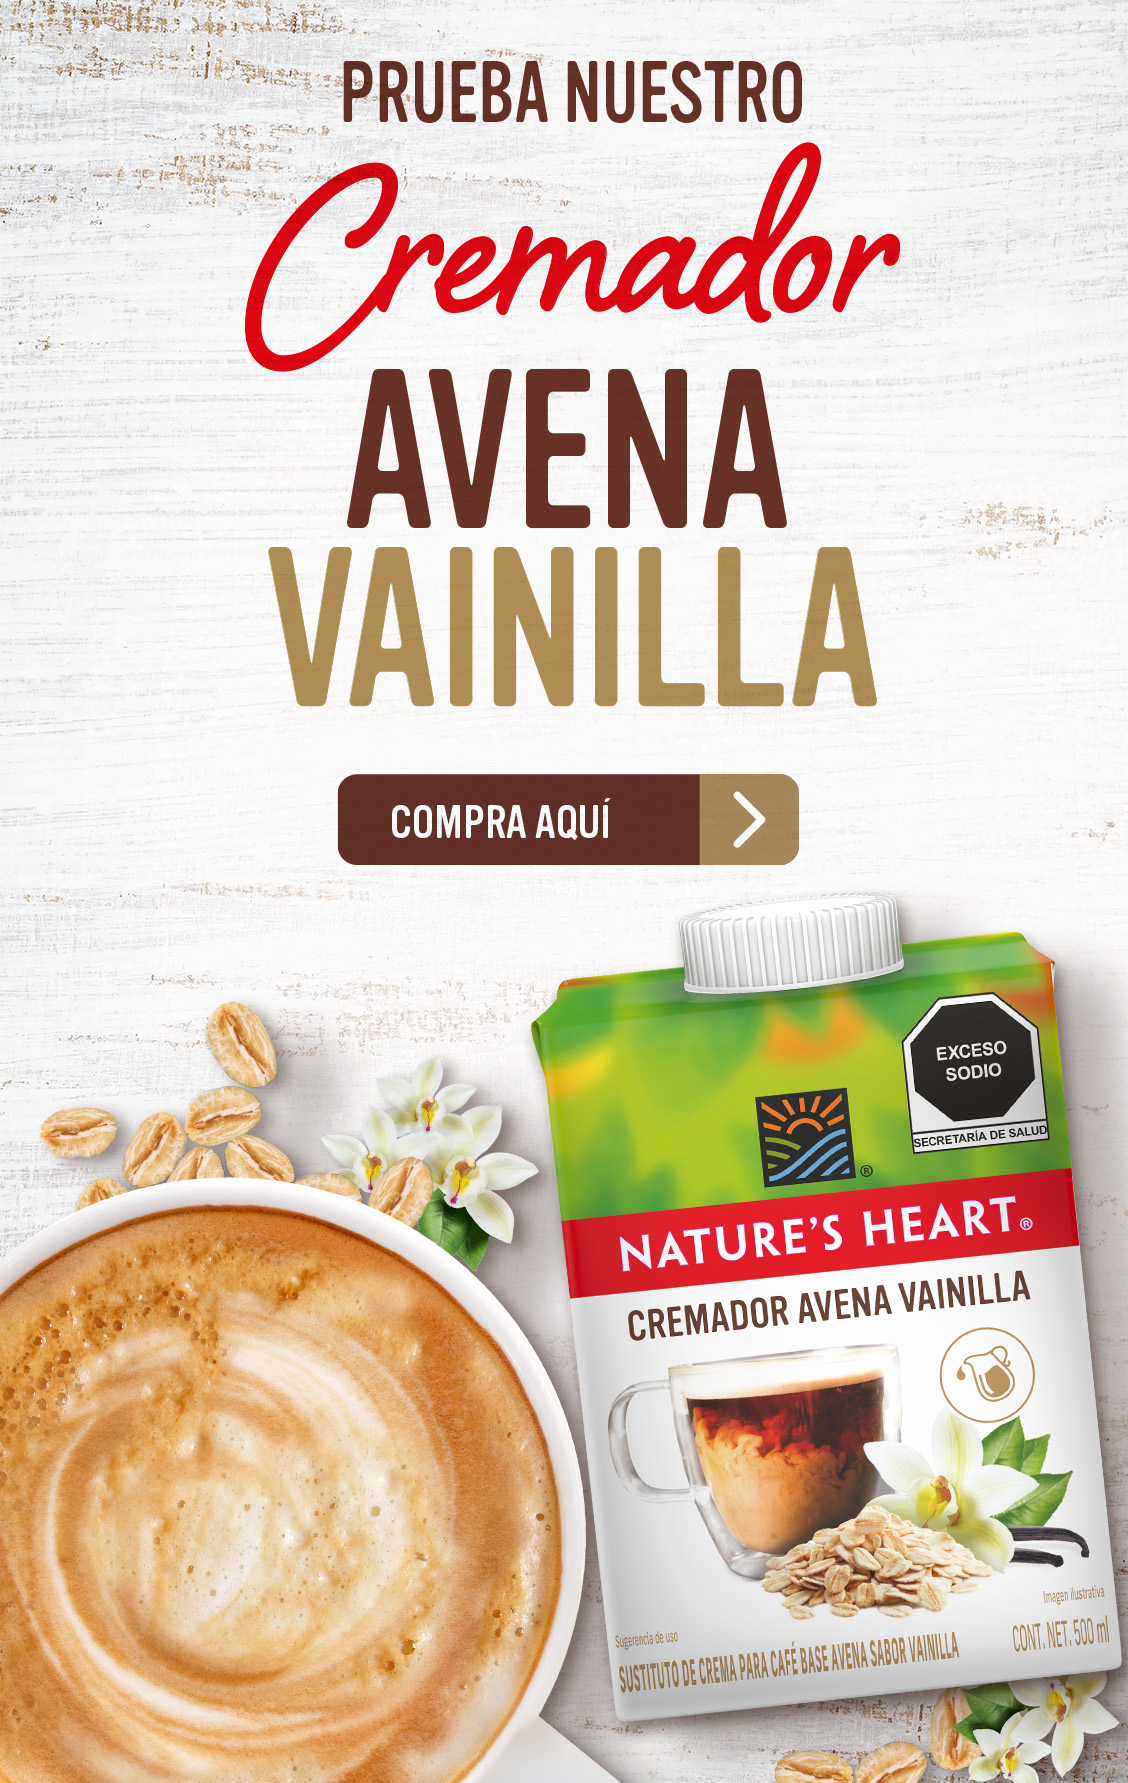 Cremador Avena Vainilla Nature's Heart Banner mobile